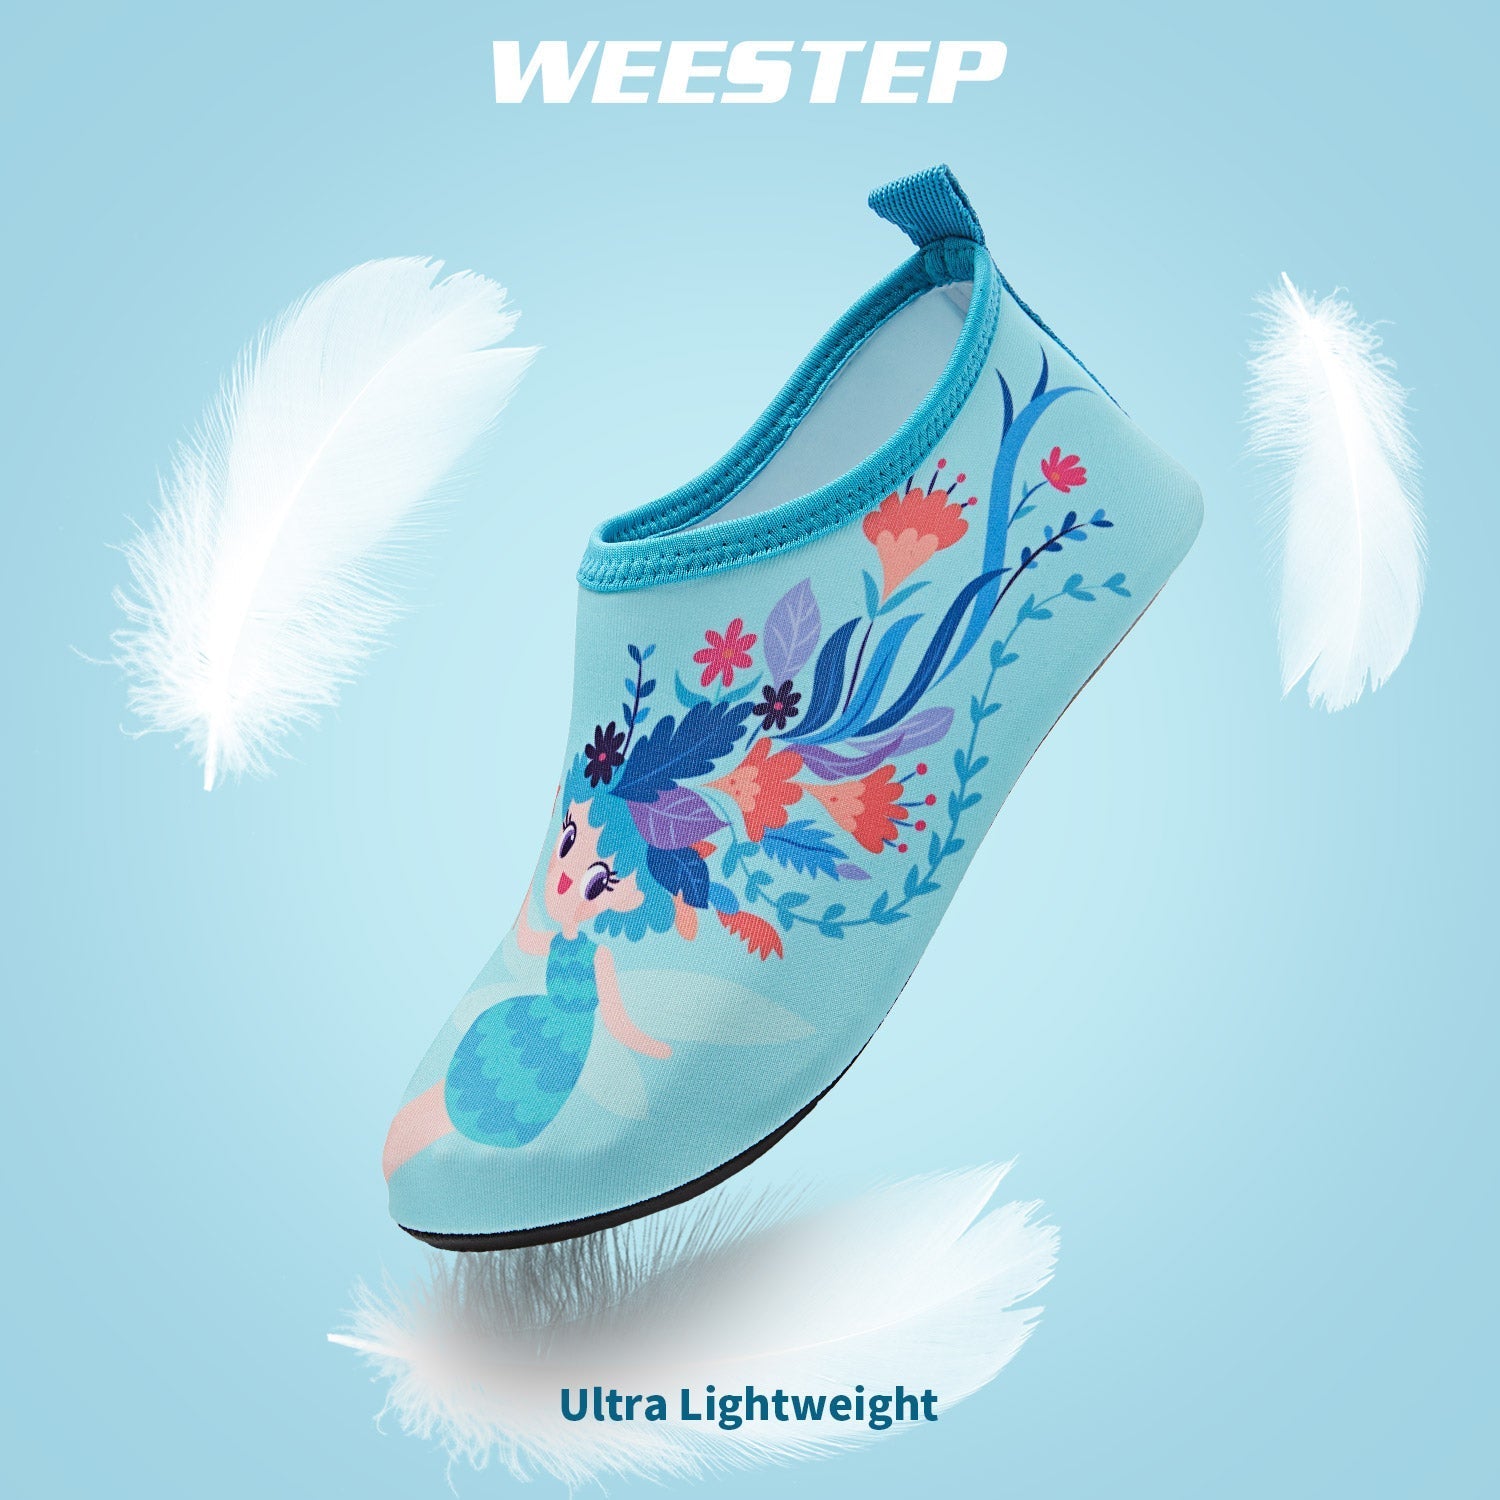 Aqua Sock Shoes Fairy Style